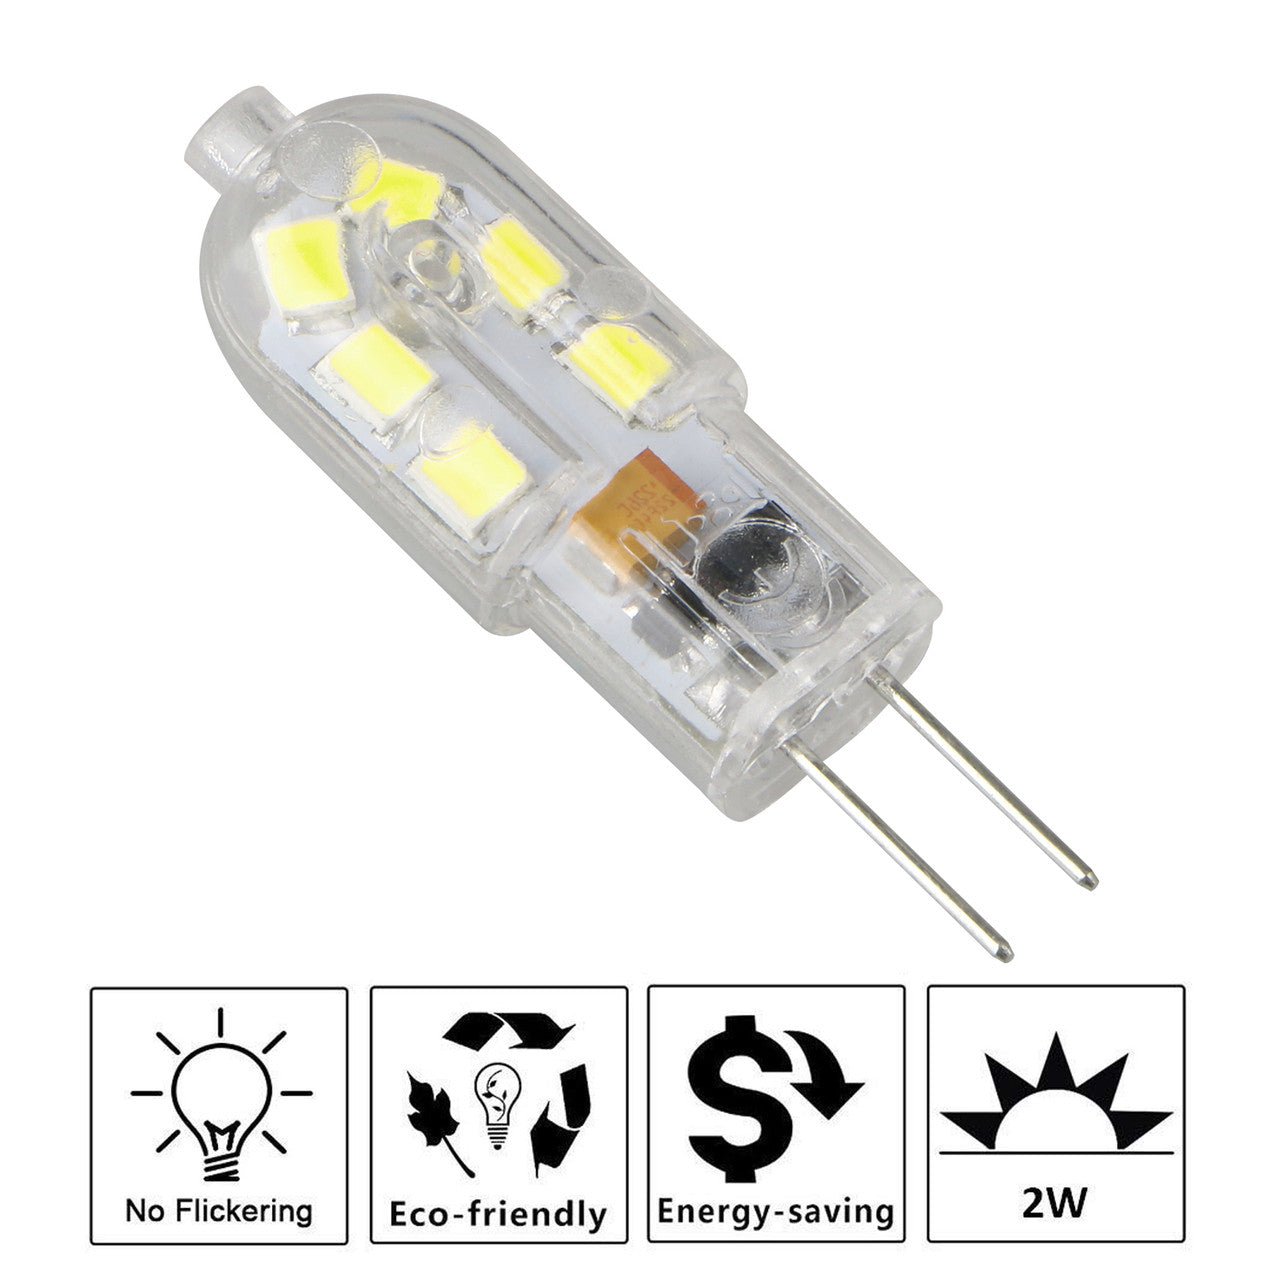 AC/DC 12V G4 LED Light Bulb Replacement Crystal Bulbs Lamp, White,10 Pcs